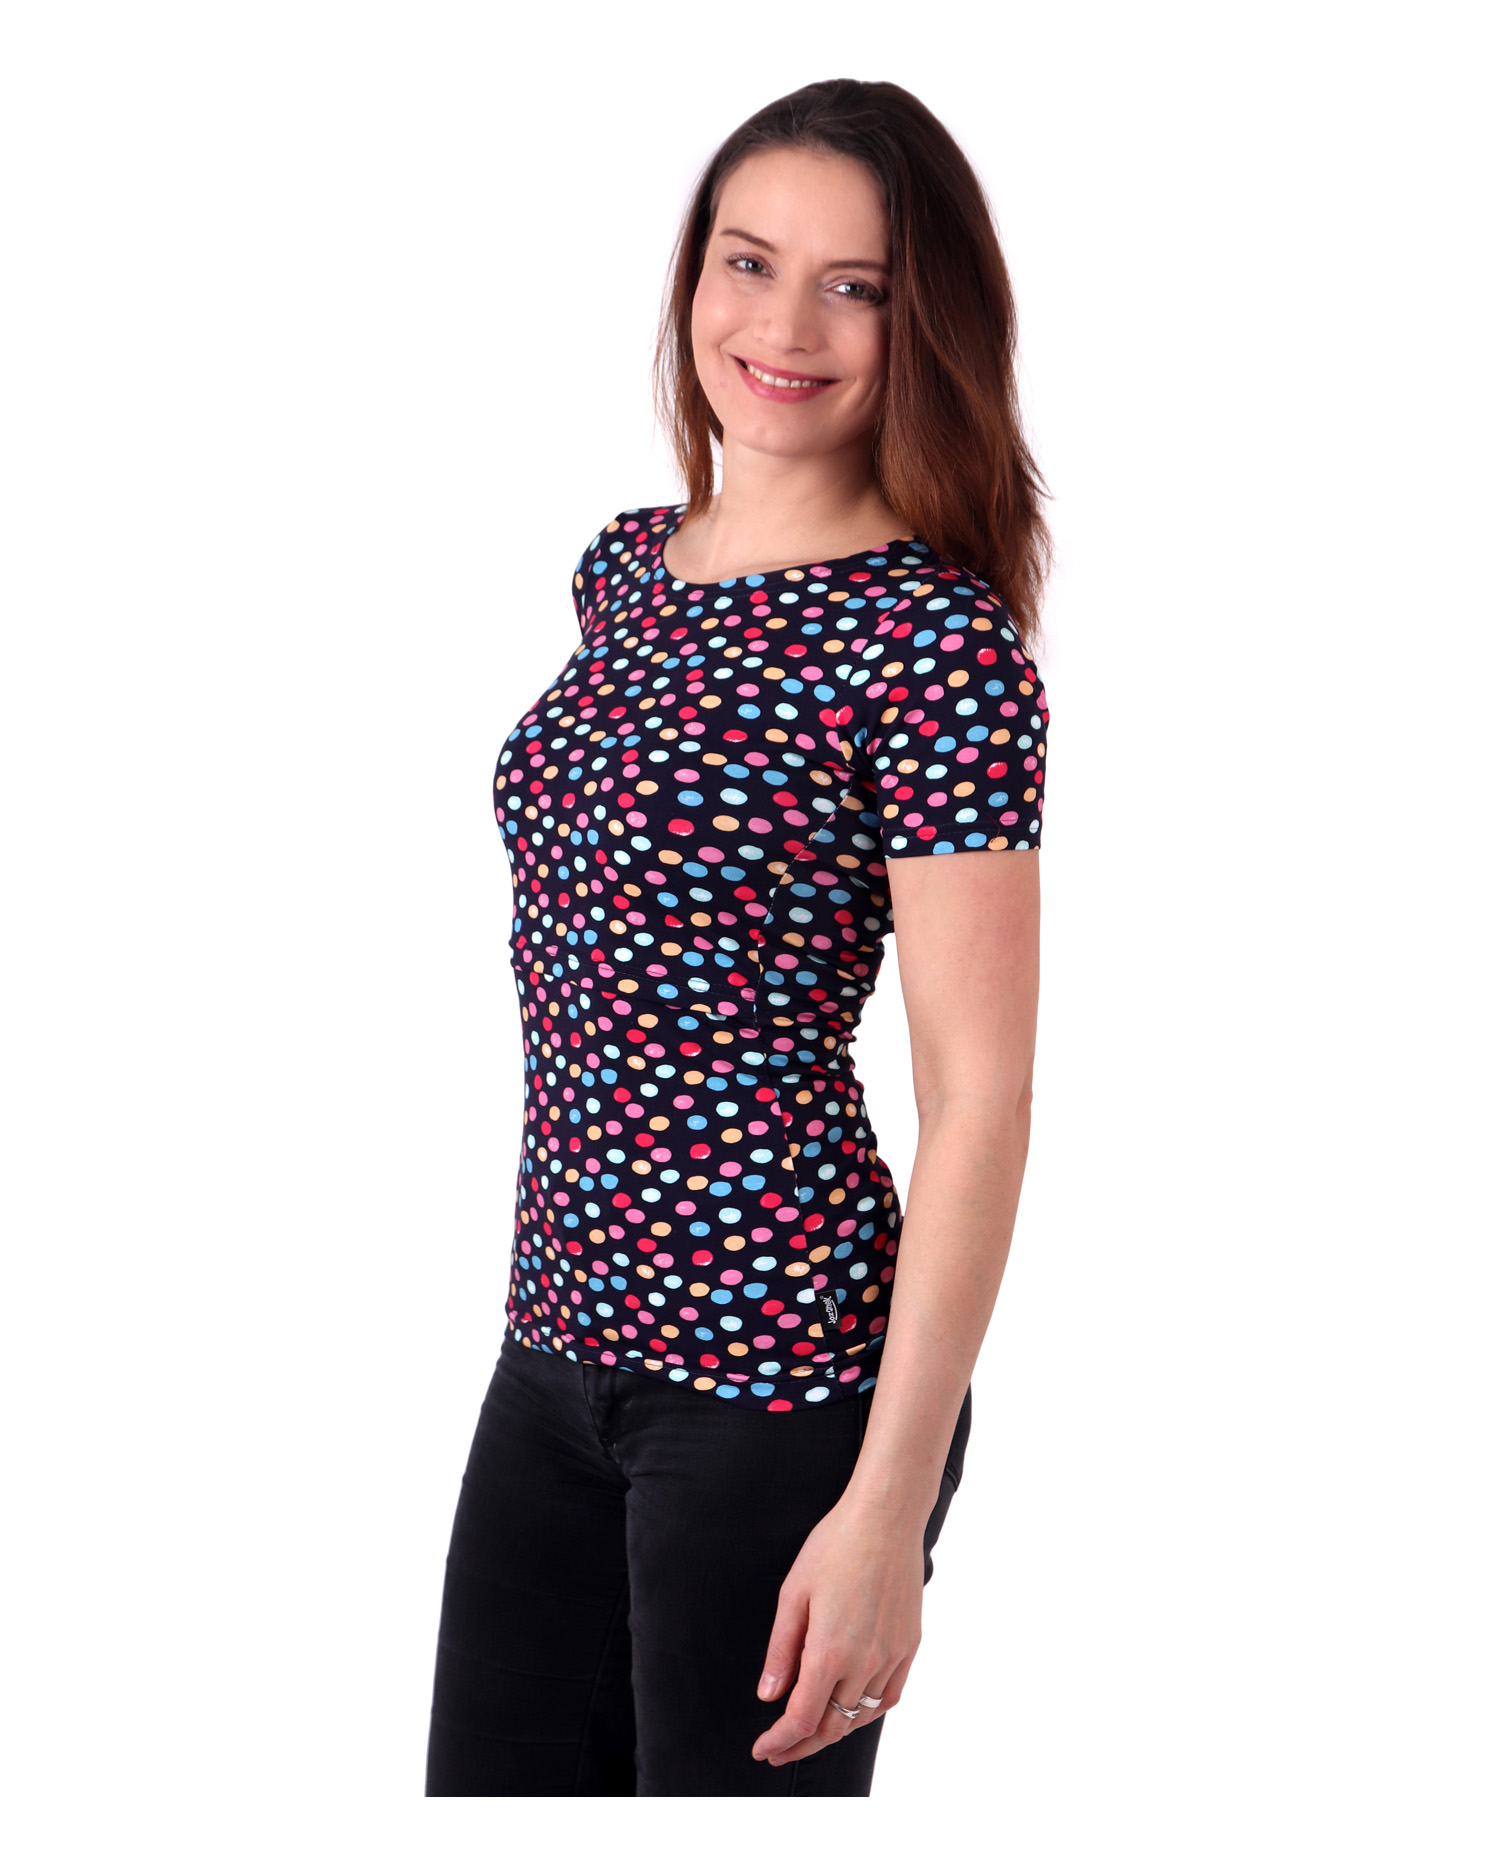 Breast-feeding T-shirt Lenka, short sleeves, colored polka dots